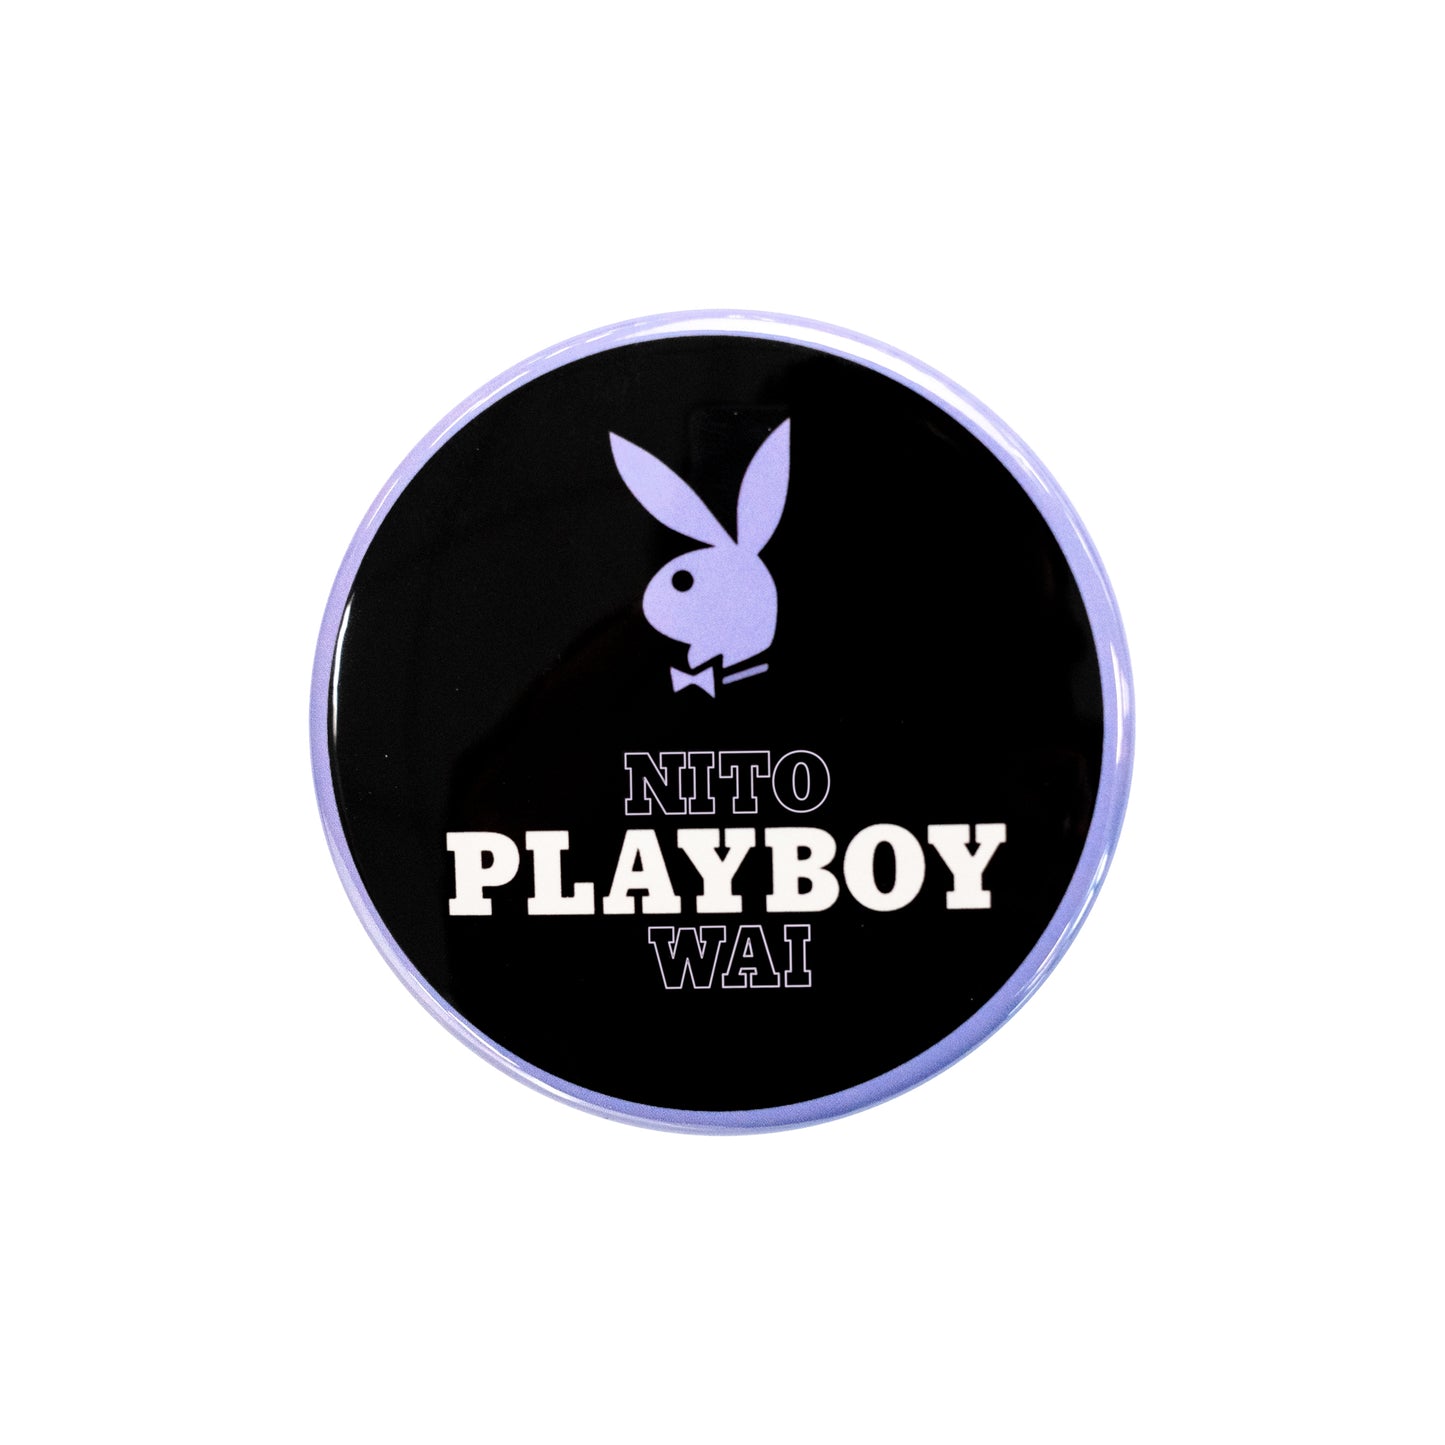 PLAYBOY x NITO WAI Pinback Button Set